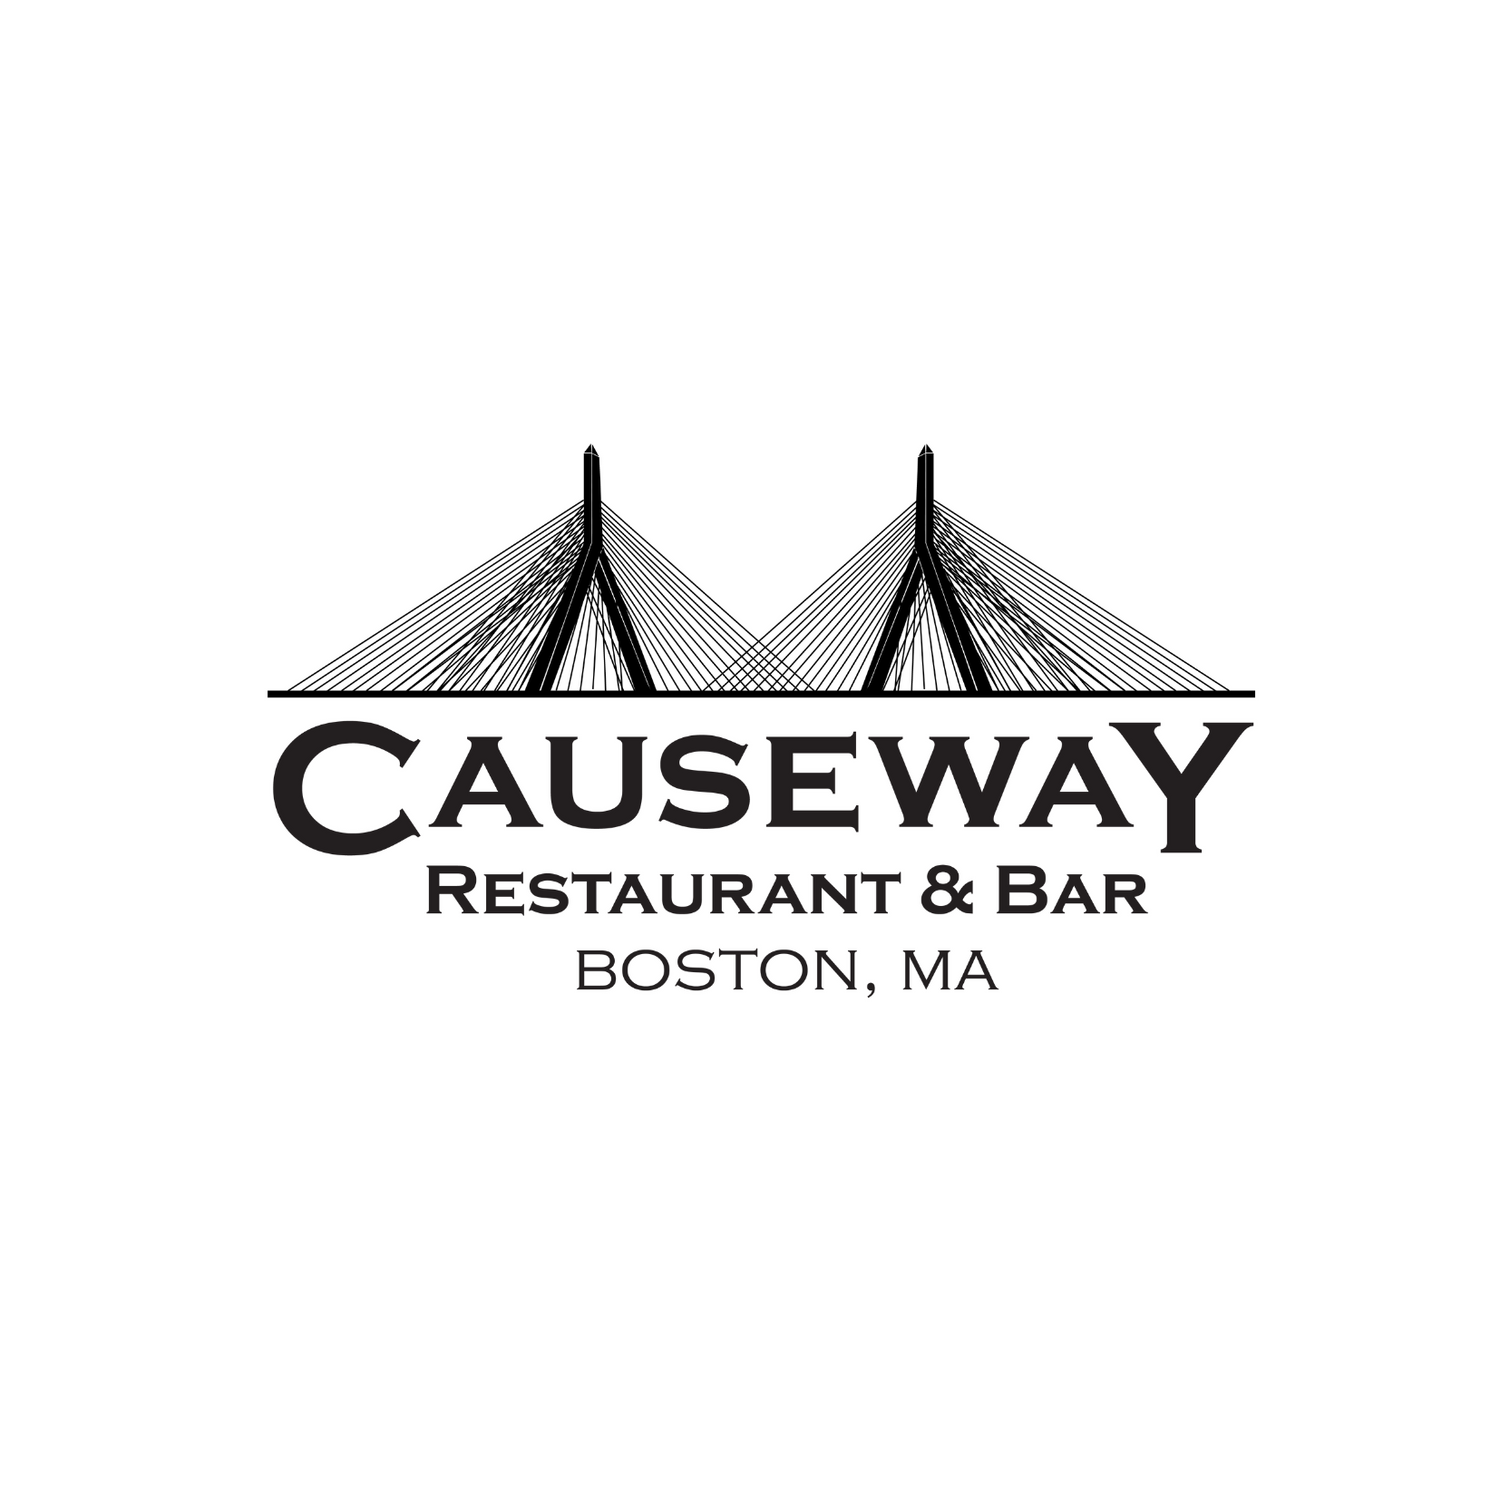 Causeway Restaurant & Bar